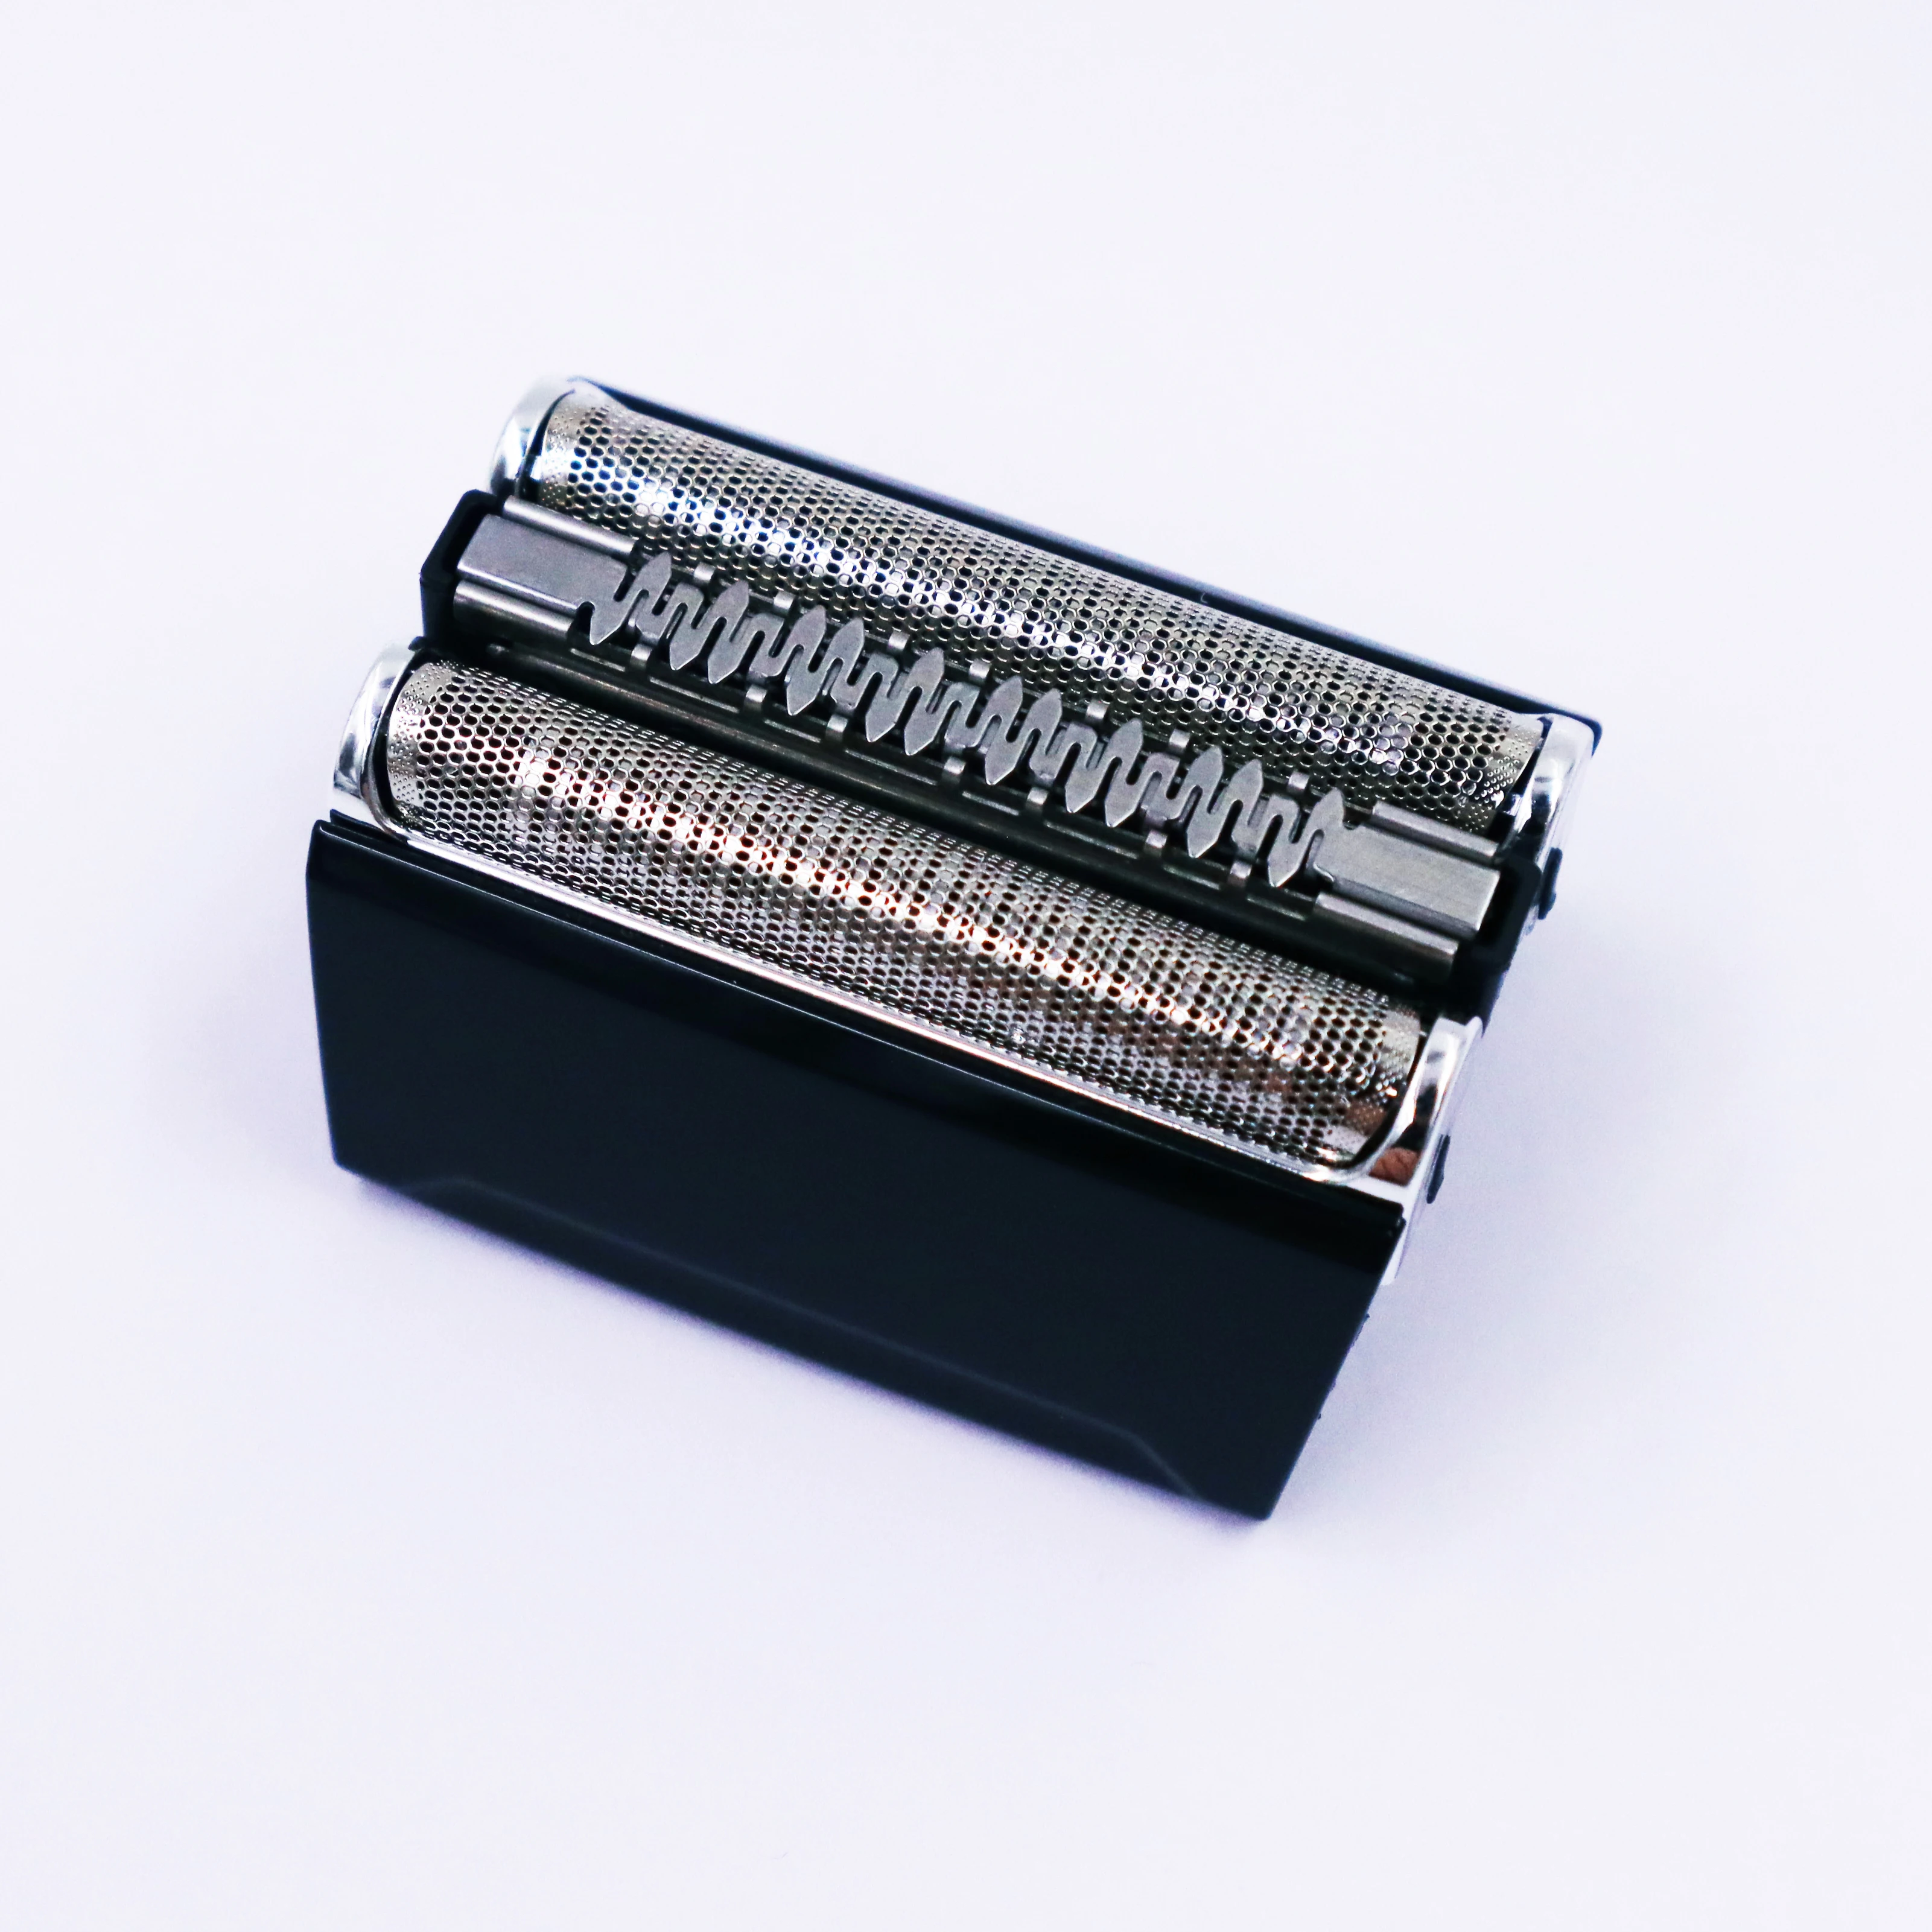 

52B 52S Replacement Shaver Cassette Head Foil For Braun Series 5 5020 5020s 5030 5030s 5040 5040s 5050 5050cc 5070 5090 Shaver